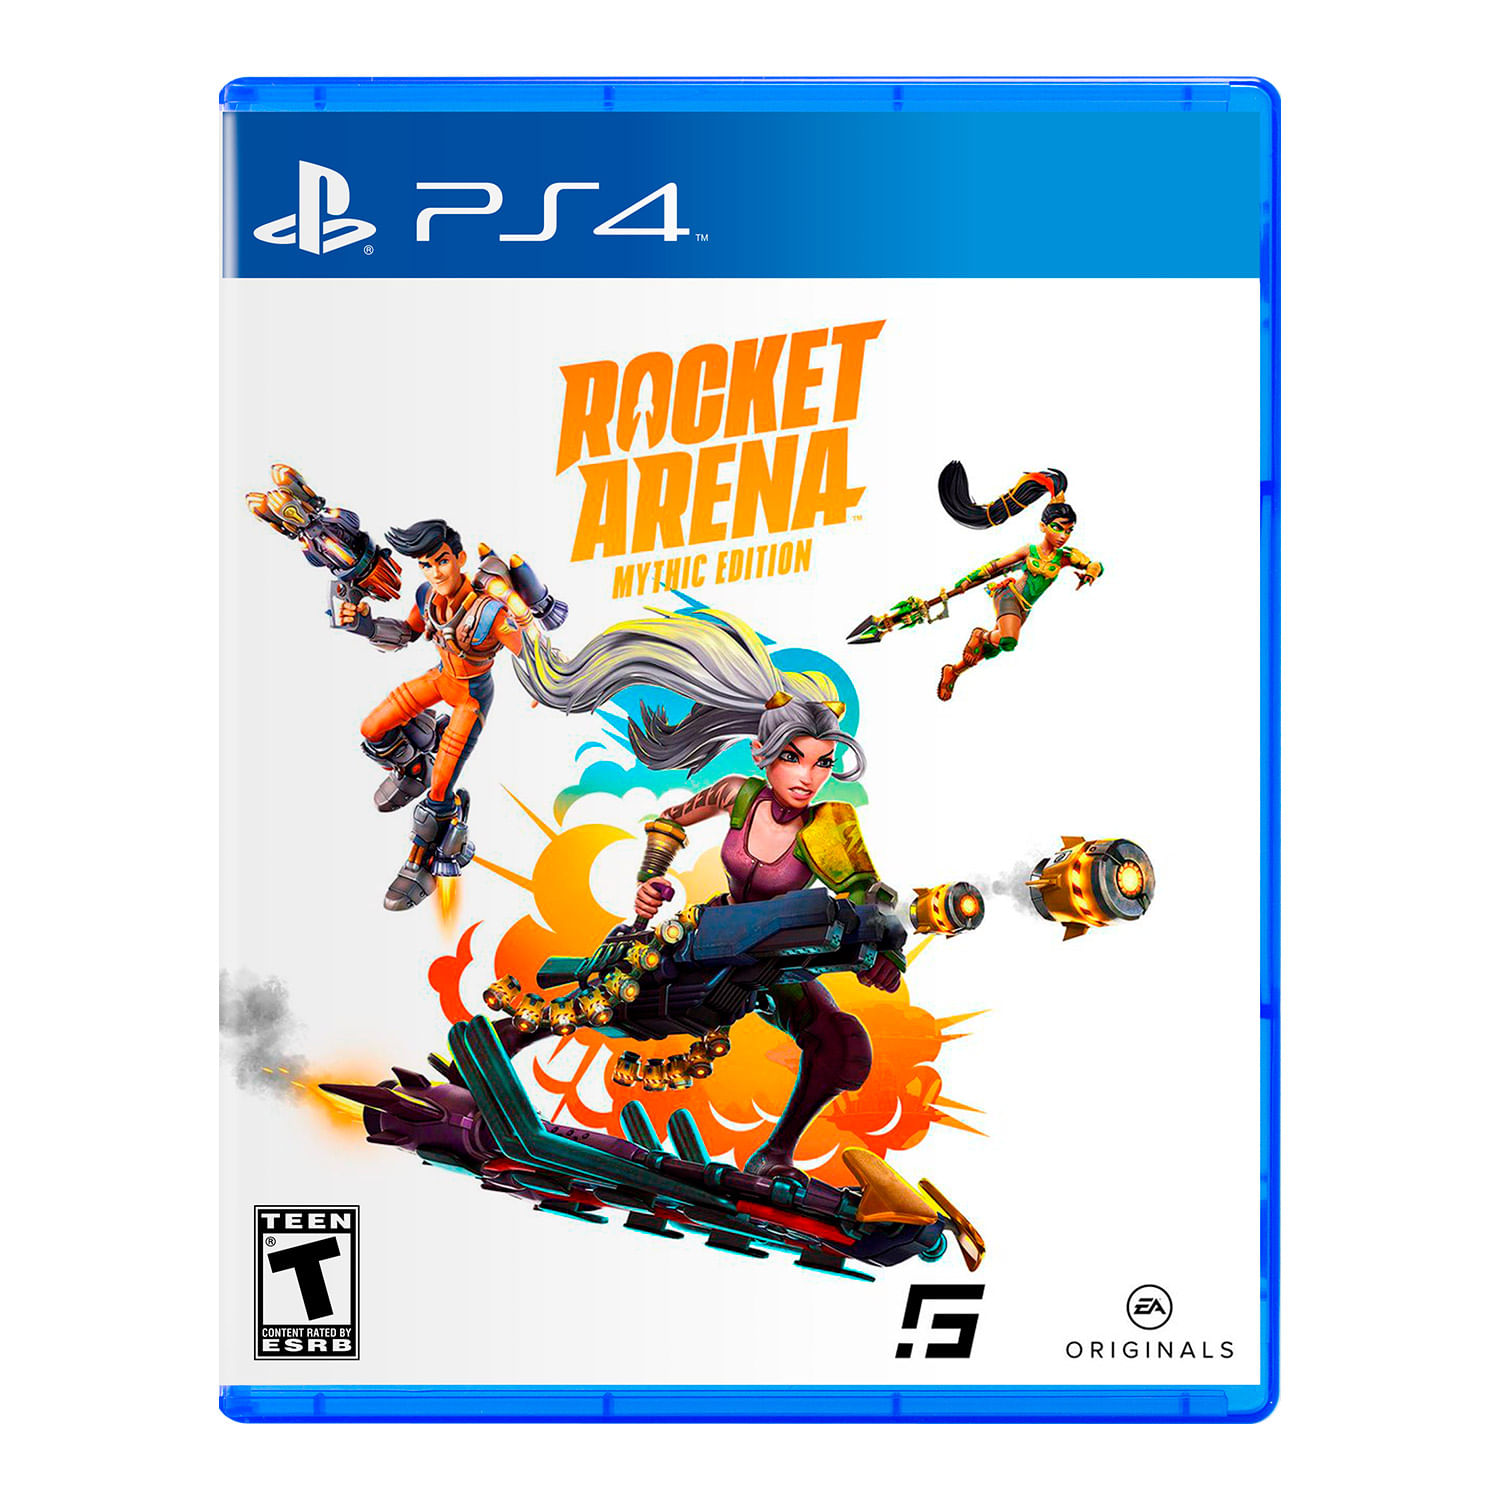 Videojuego Rocket Arena Mythic Edition Playstation 4 Latam